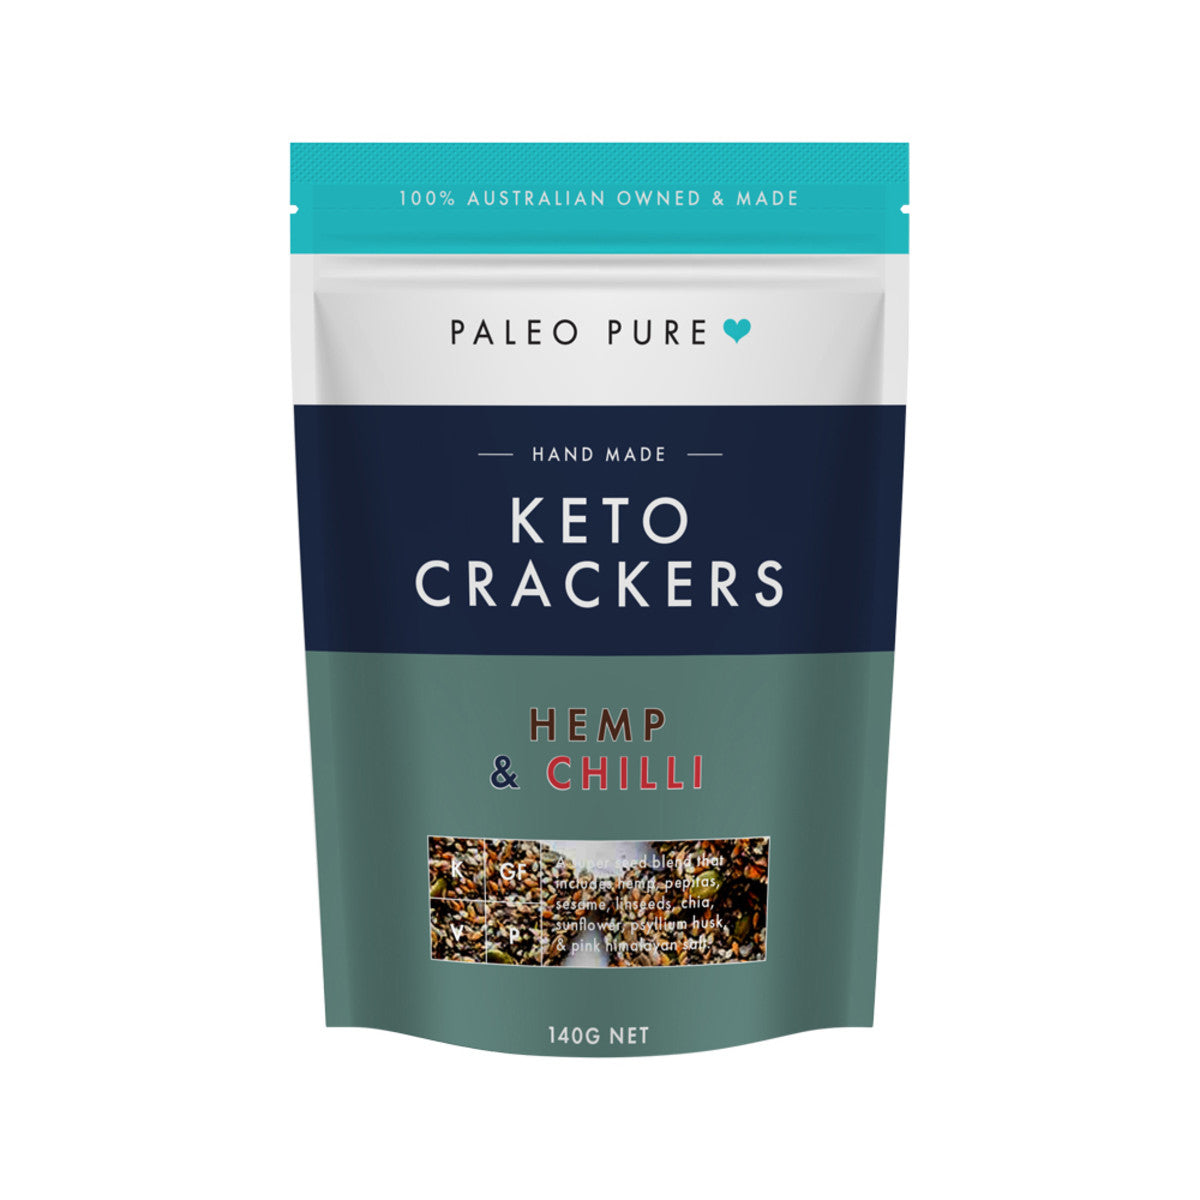 Paleo Pure Keto Crackers 140gm, Hemp & Chilli Flavour